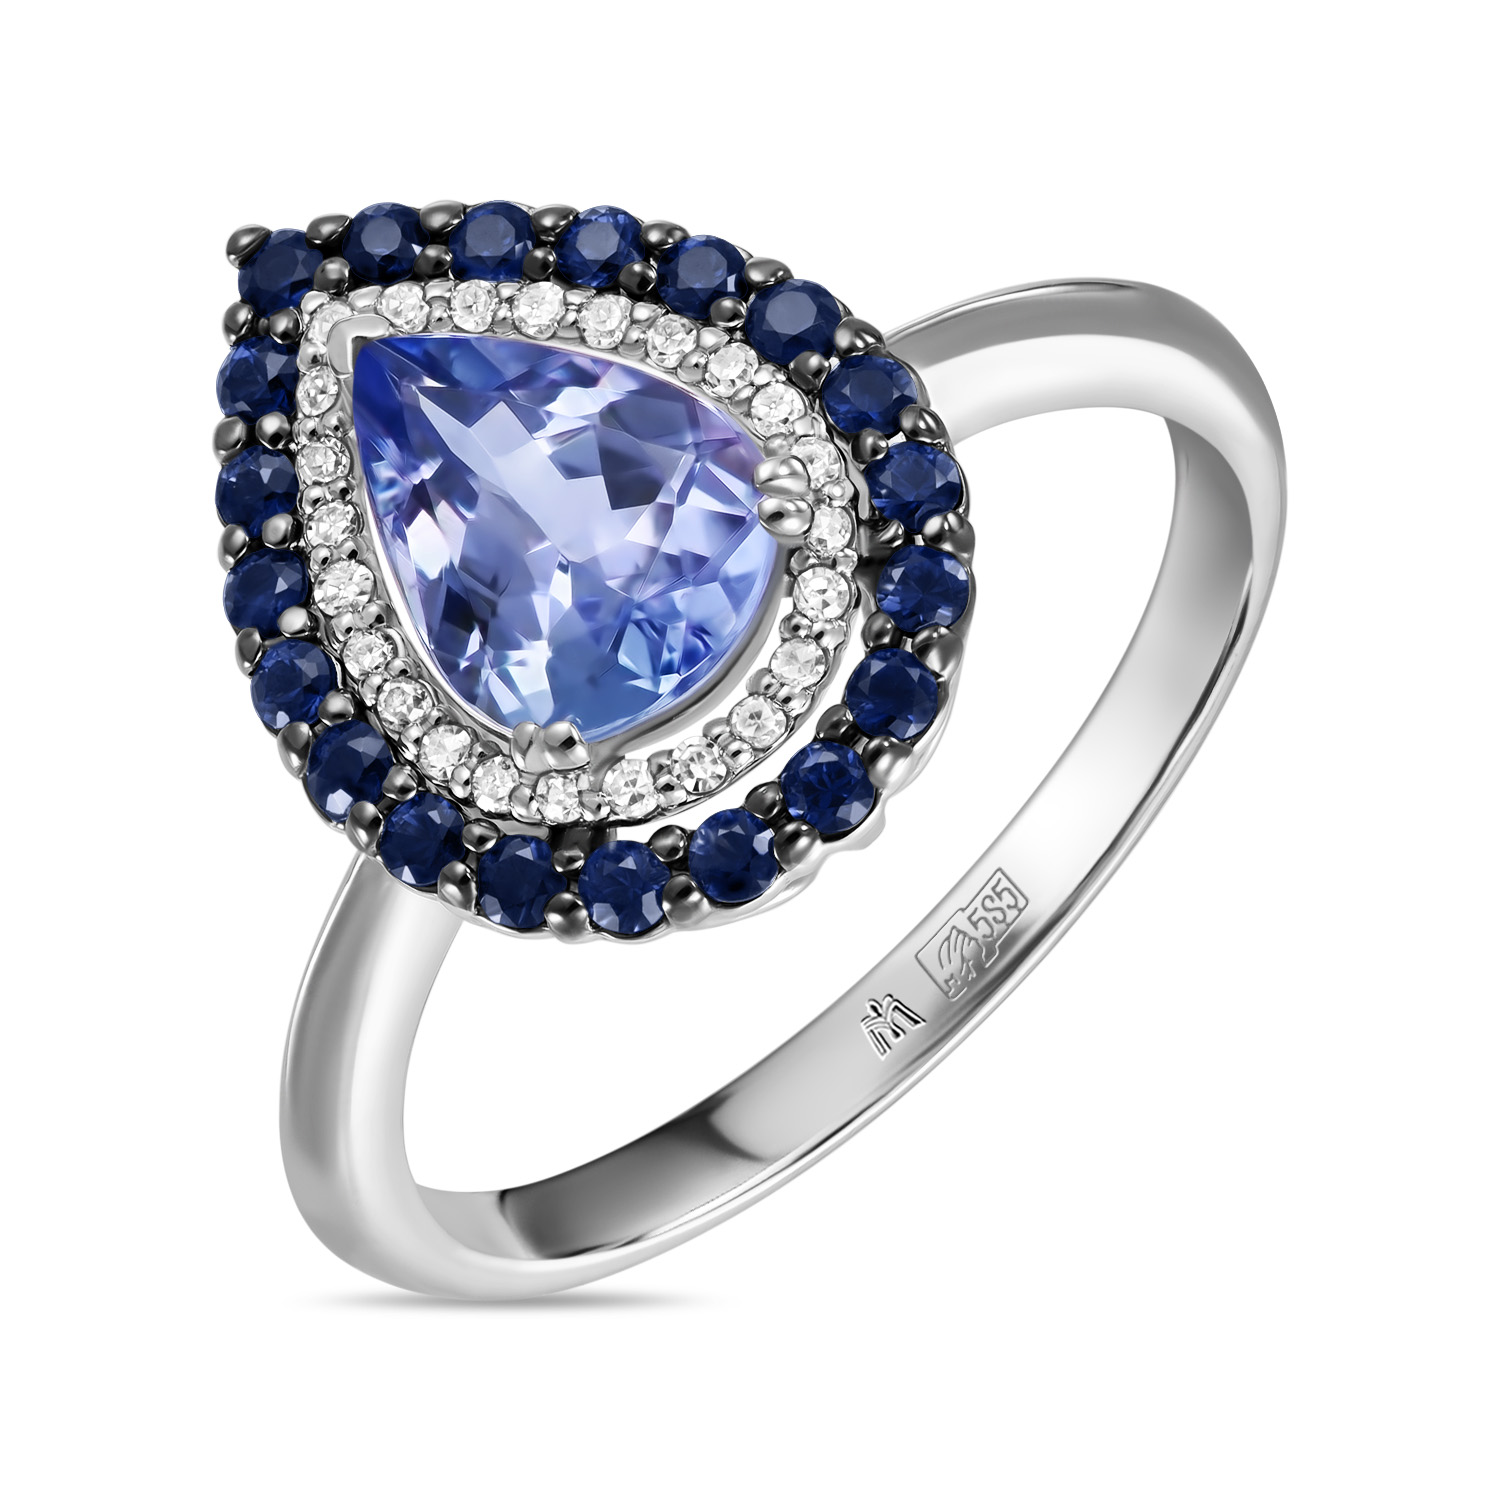 Кольца МЮЗ Кольцо с бриллиантами, сапфирами и танзанитом кольца miuz diamonds r2018 rr01049adi r17